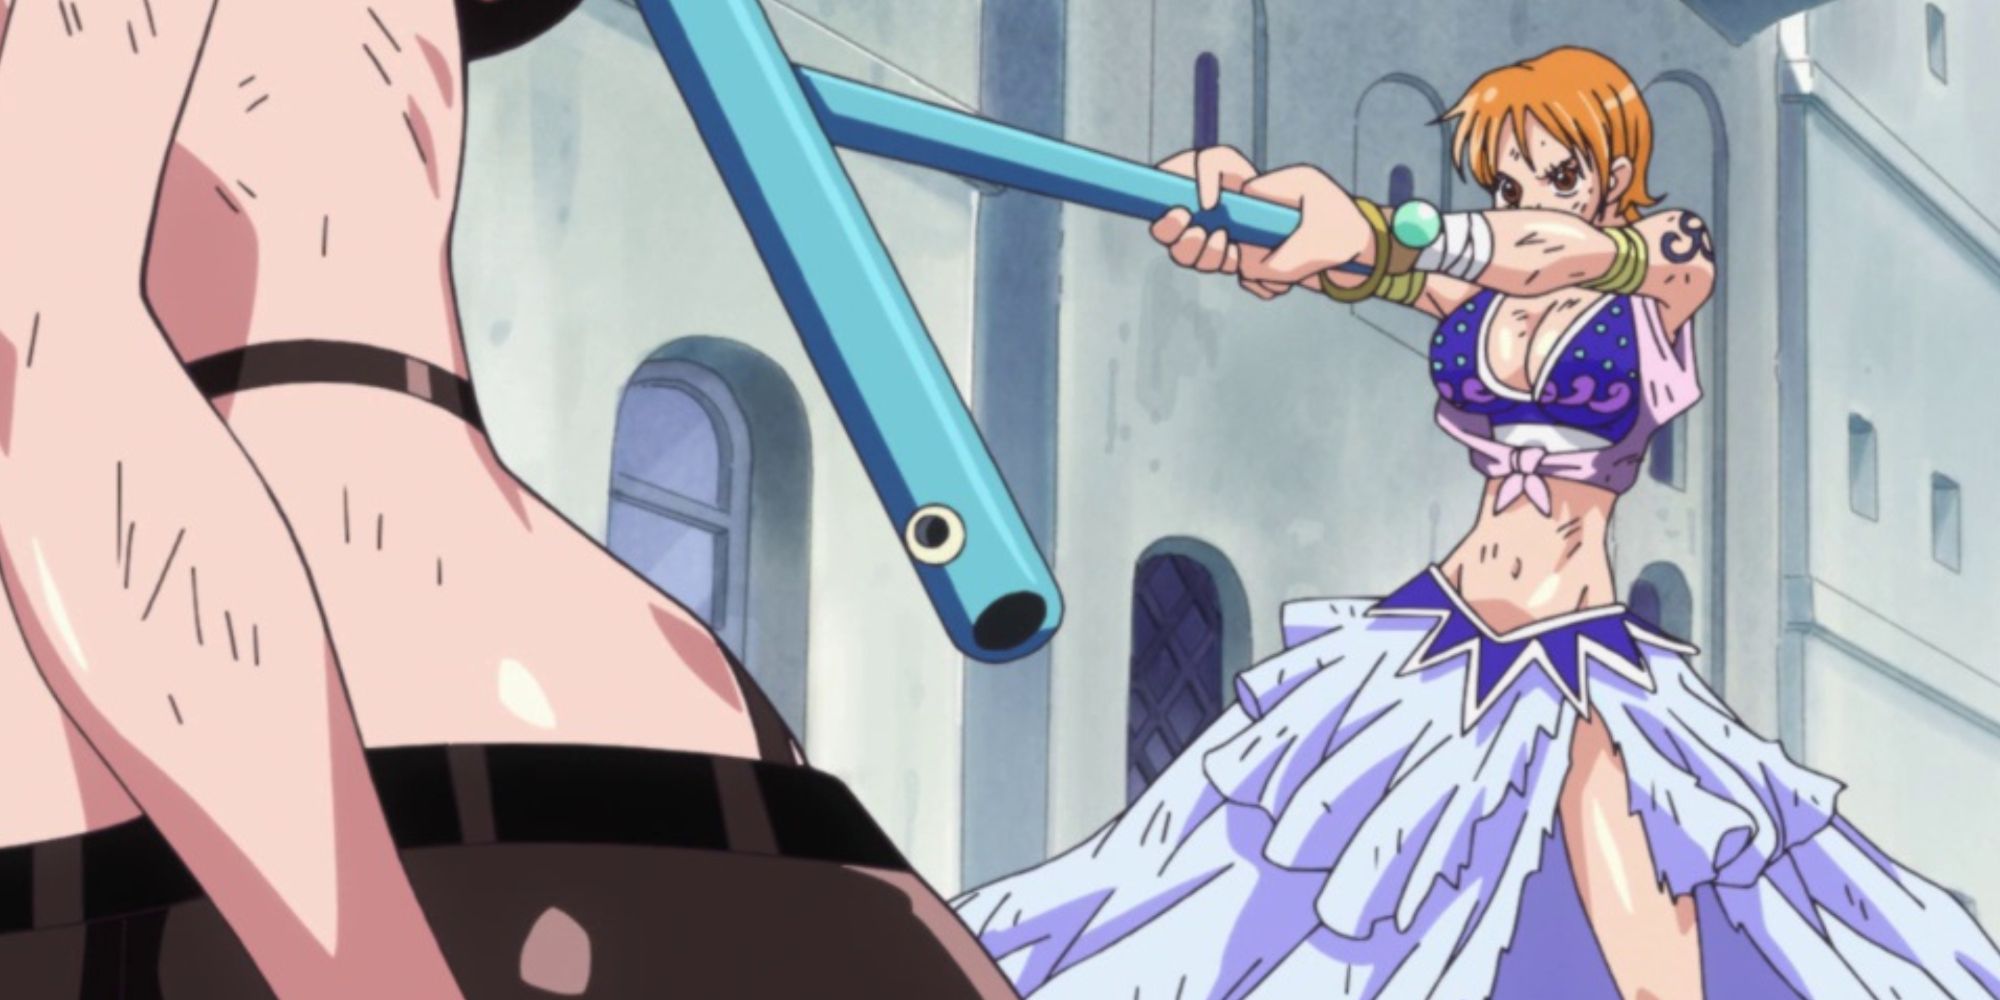 Nami during her battle with Miss Doublefinger in One Piece's Alabasta arc